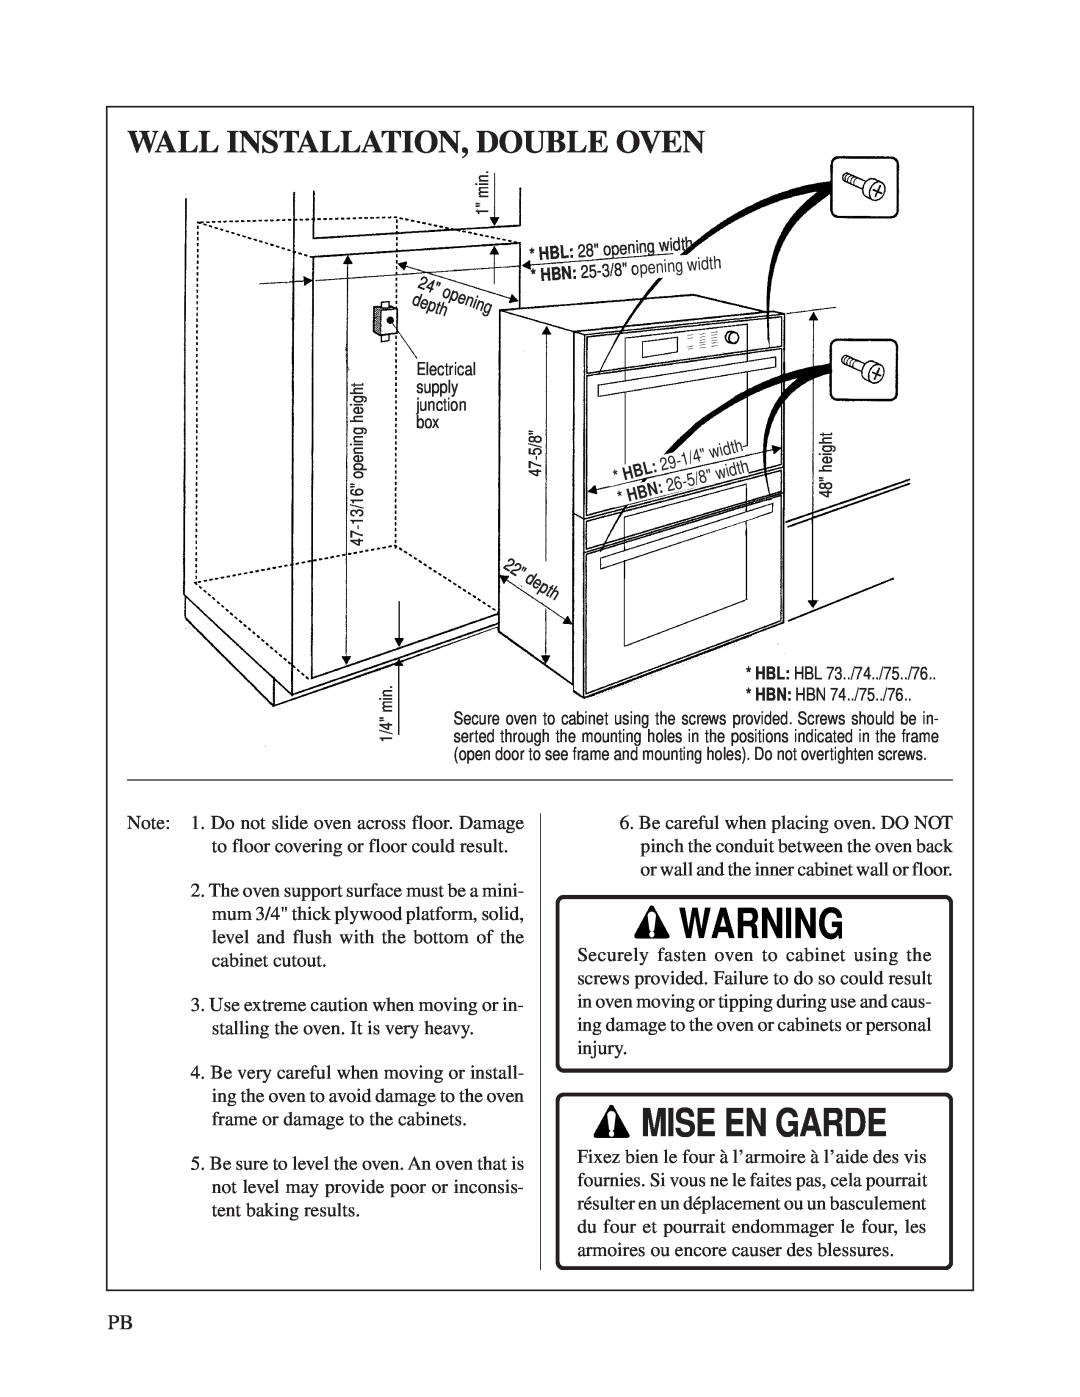 Bosch Appliances HBN 74 instruction manual Wall Installation, Double Oven, depth, Mise En Garde 